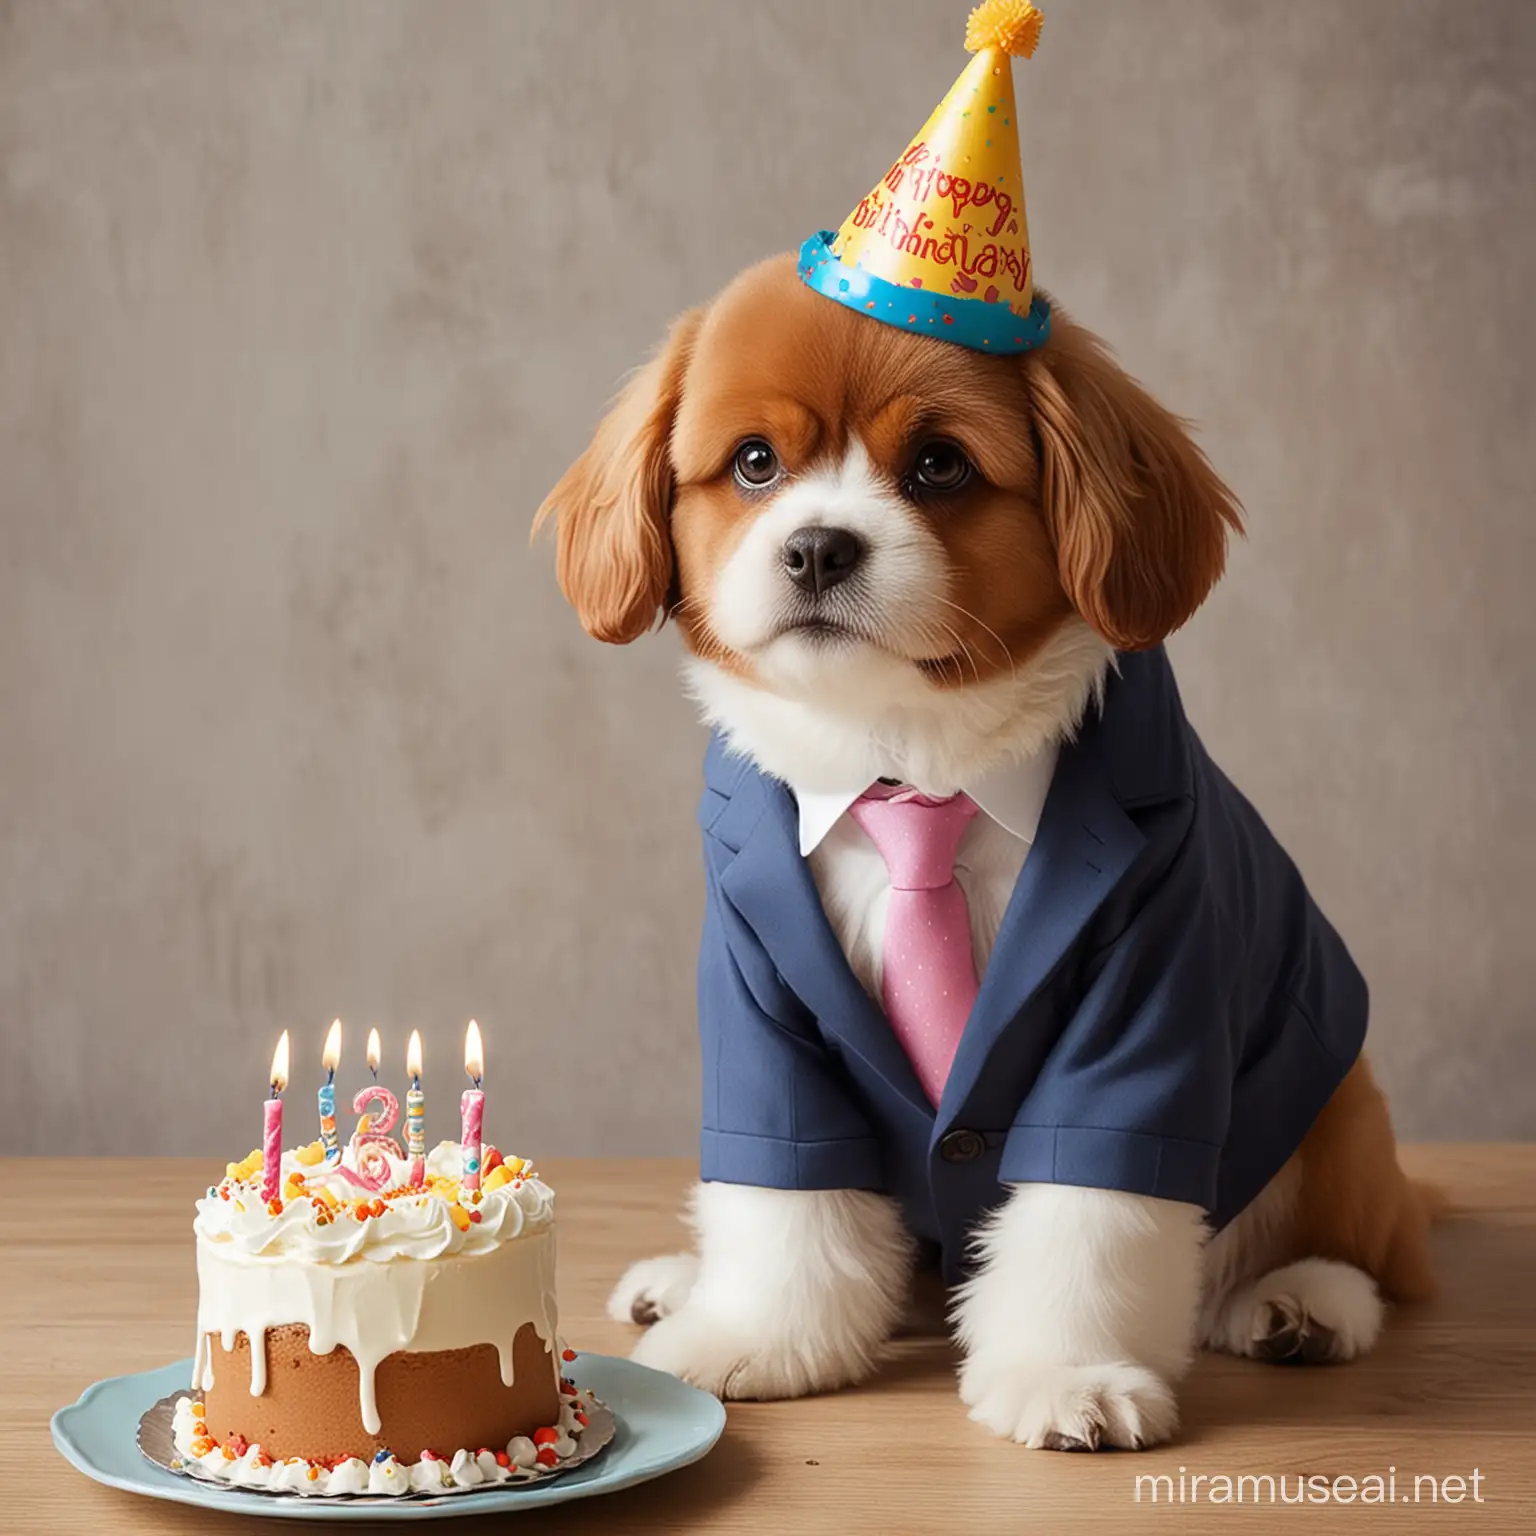 Dog in Formal Attire Celebrating Birthday with Cake